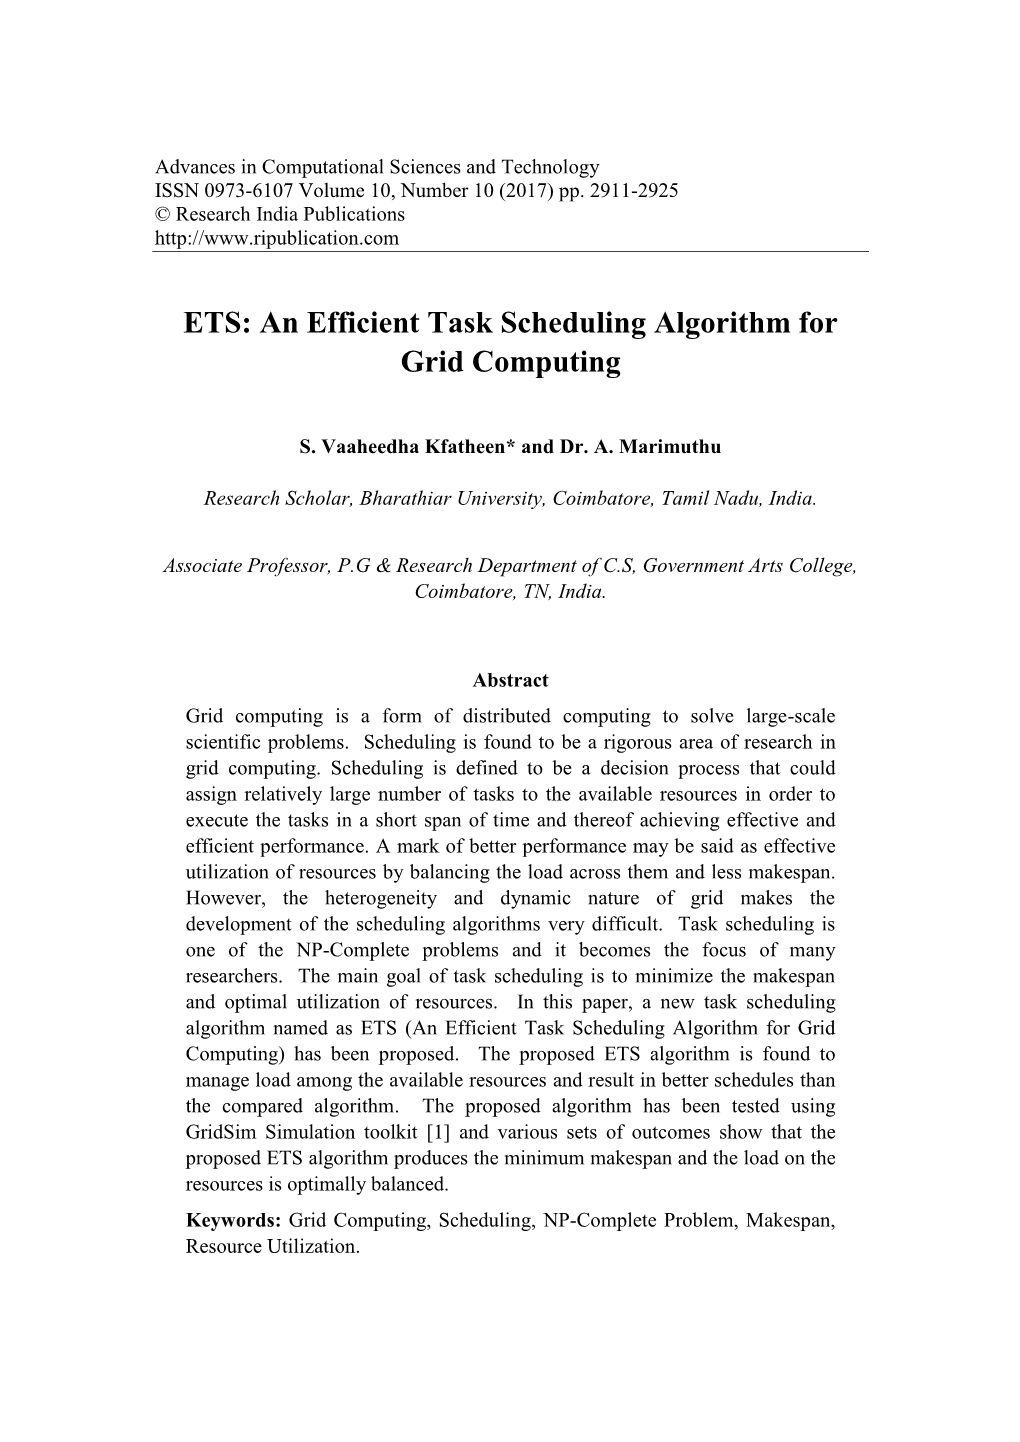 ETS: an Efficient Task Scheduling Algorithm for Grid Computing